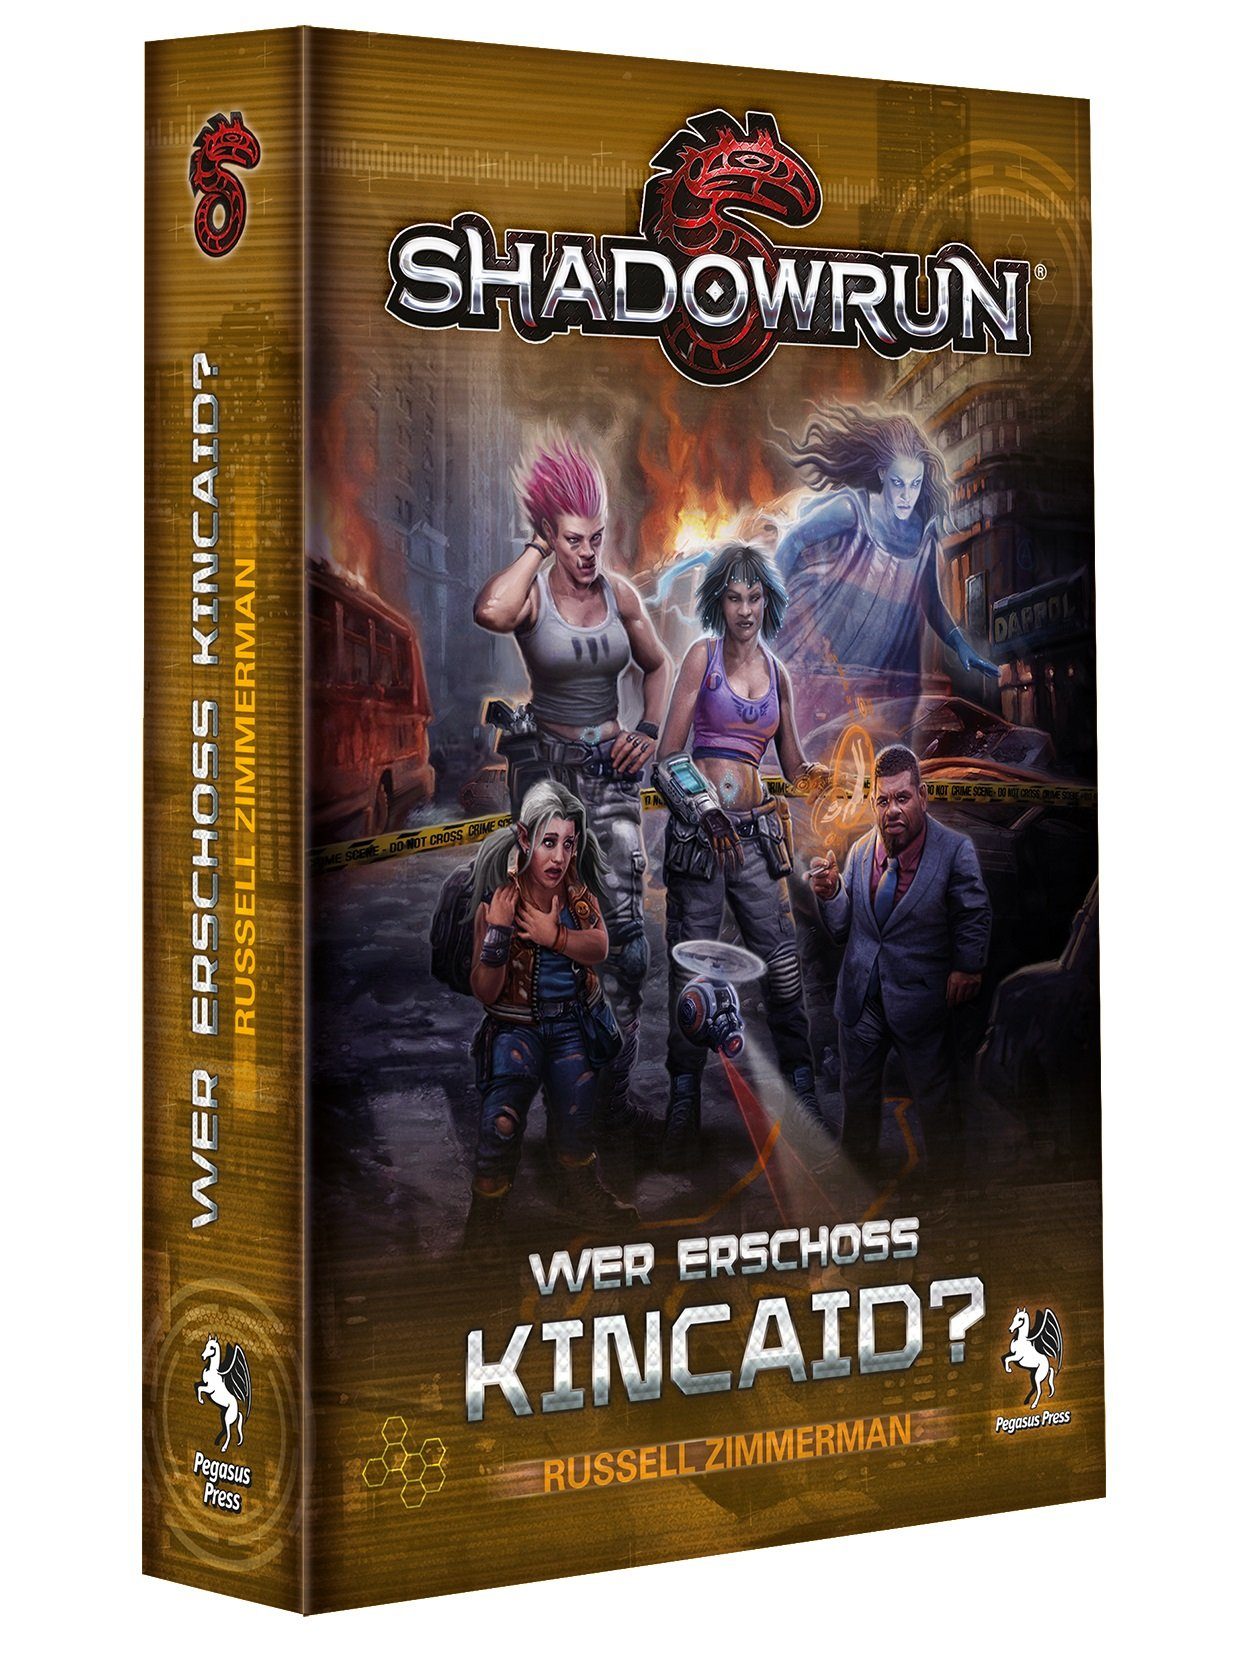 Pegasus Spiele Verbandbuch Shadowrun: (Roman) Kincaid? erschoss Wer